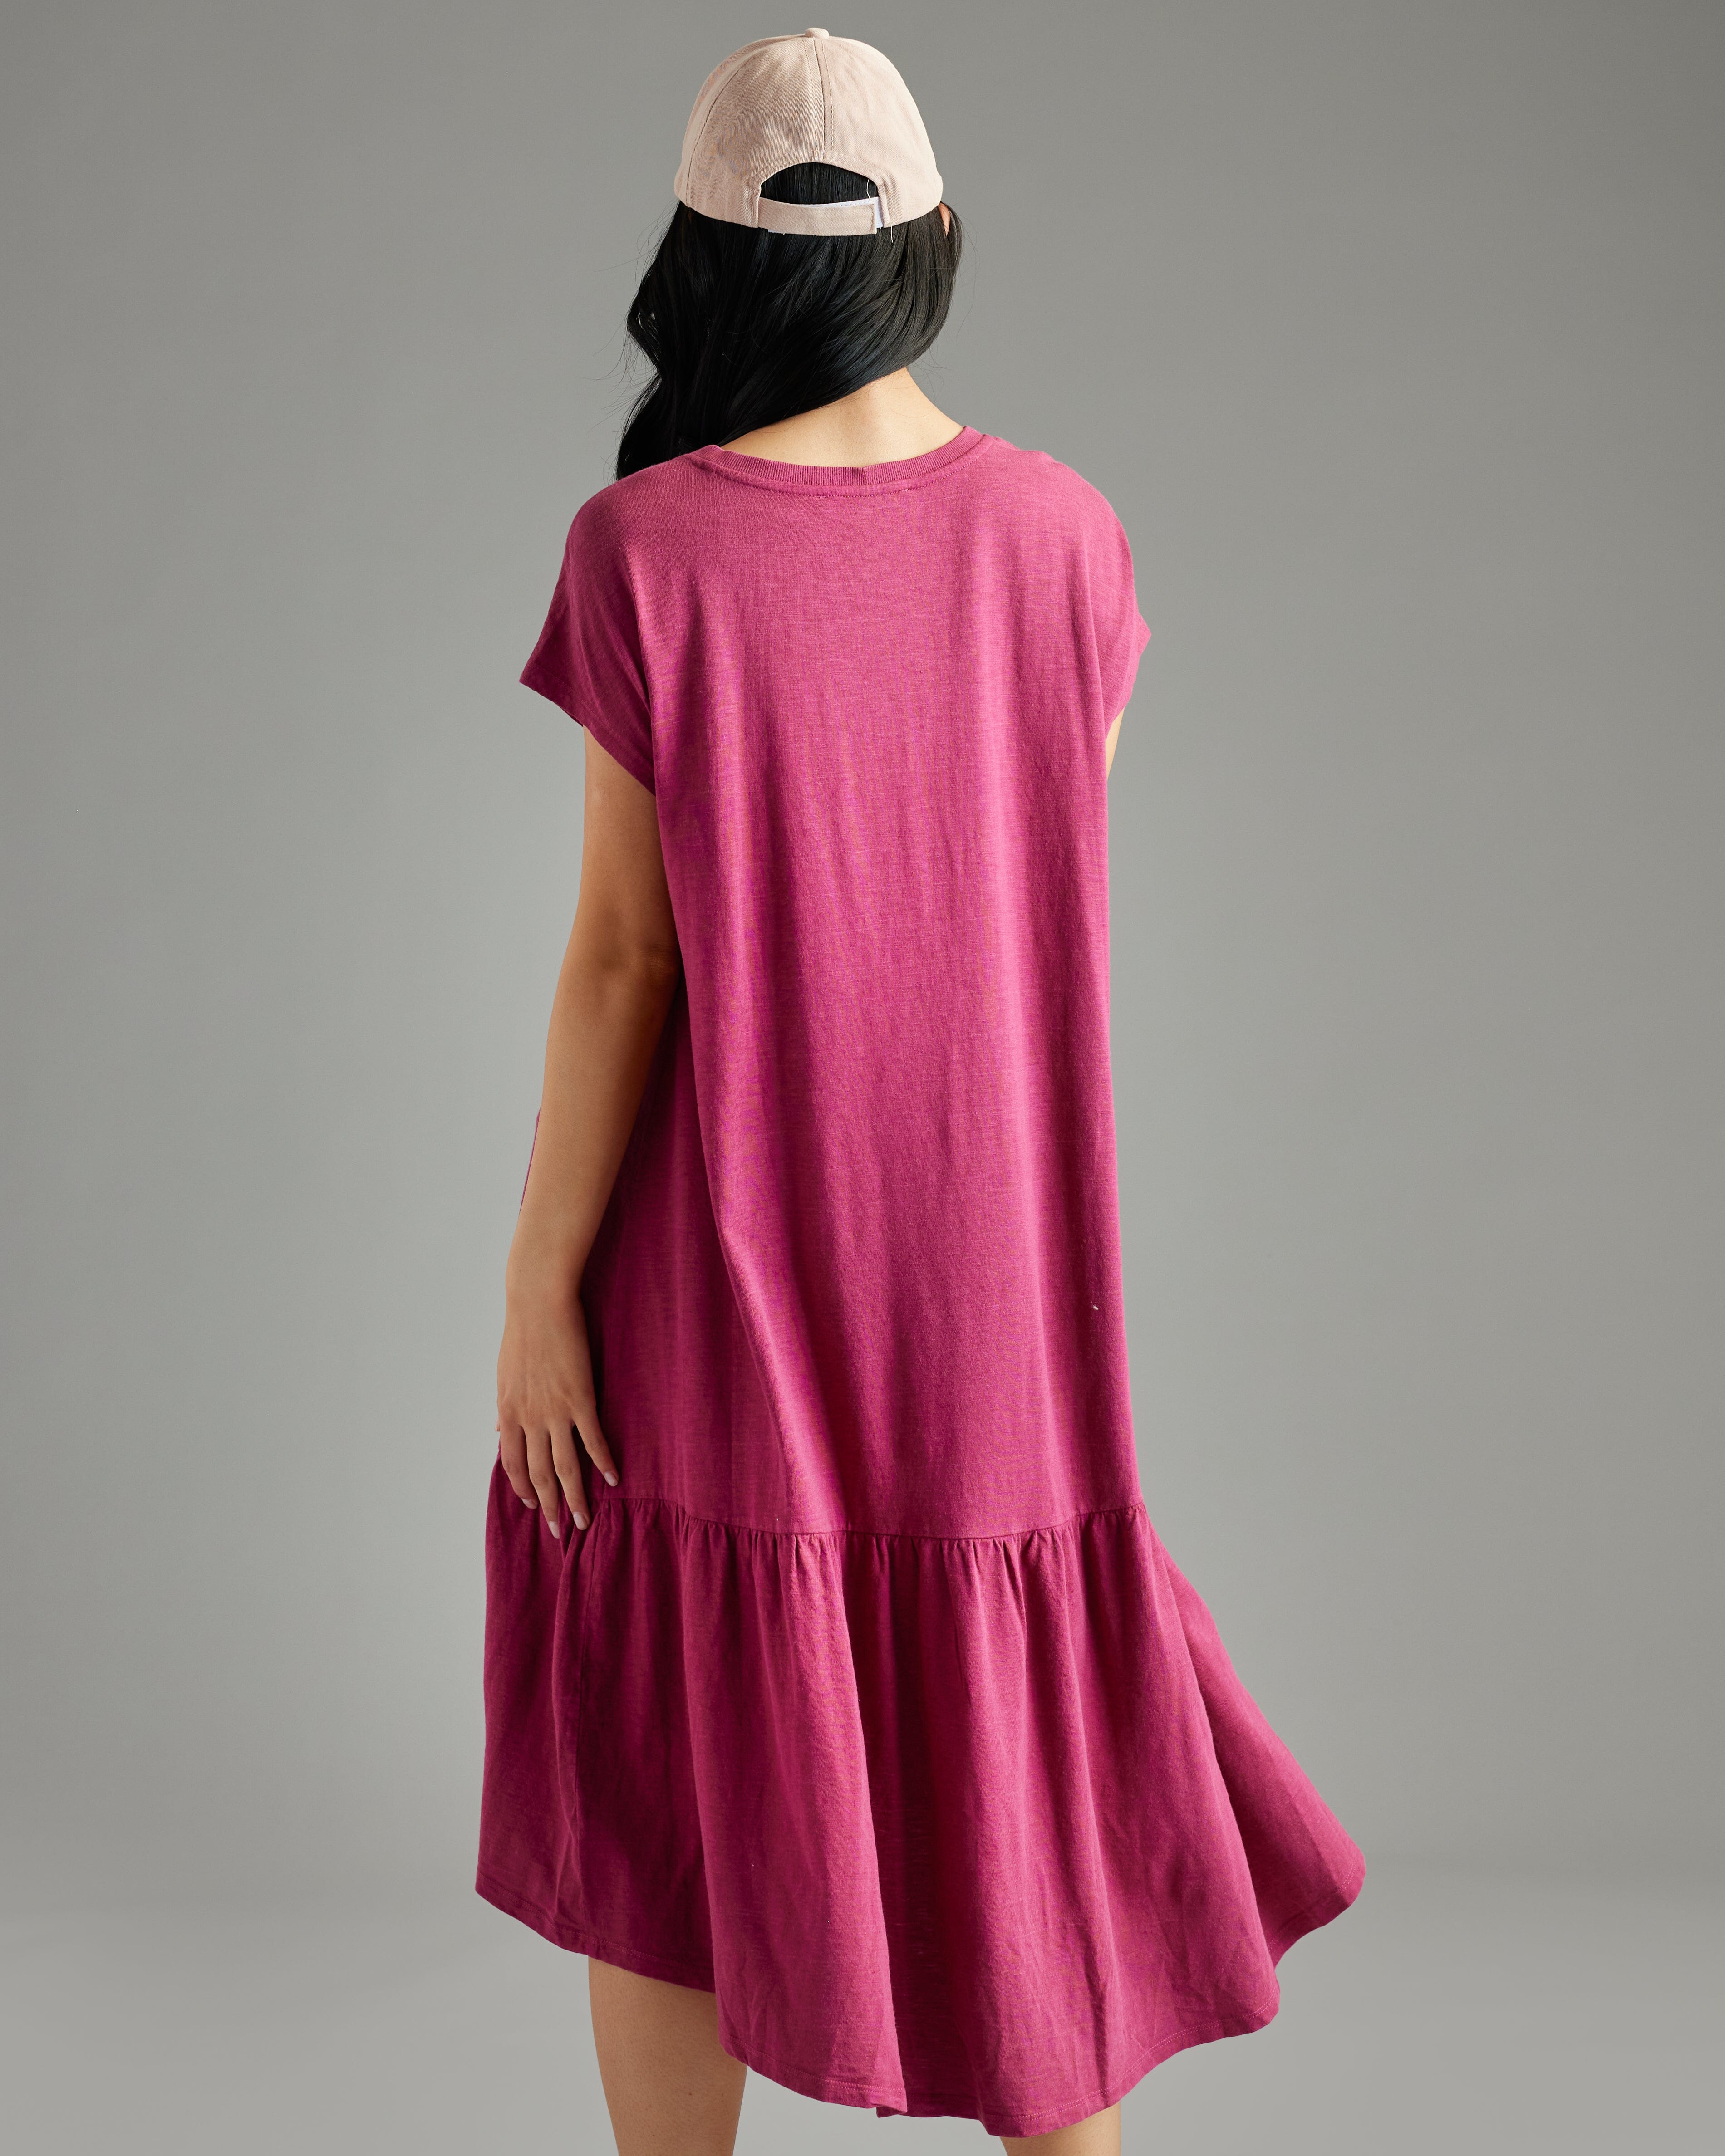 Woman in a short sleeve, v-neck, high-low hem, purple dress